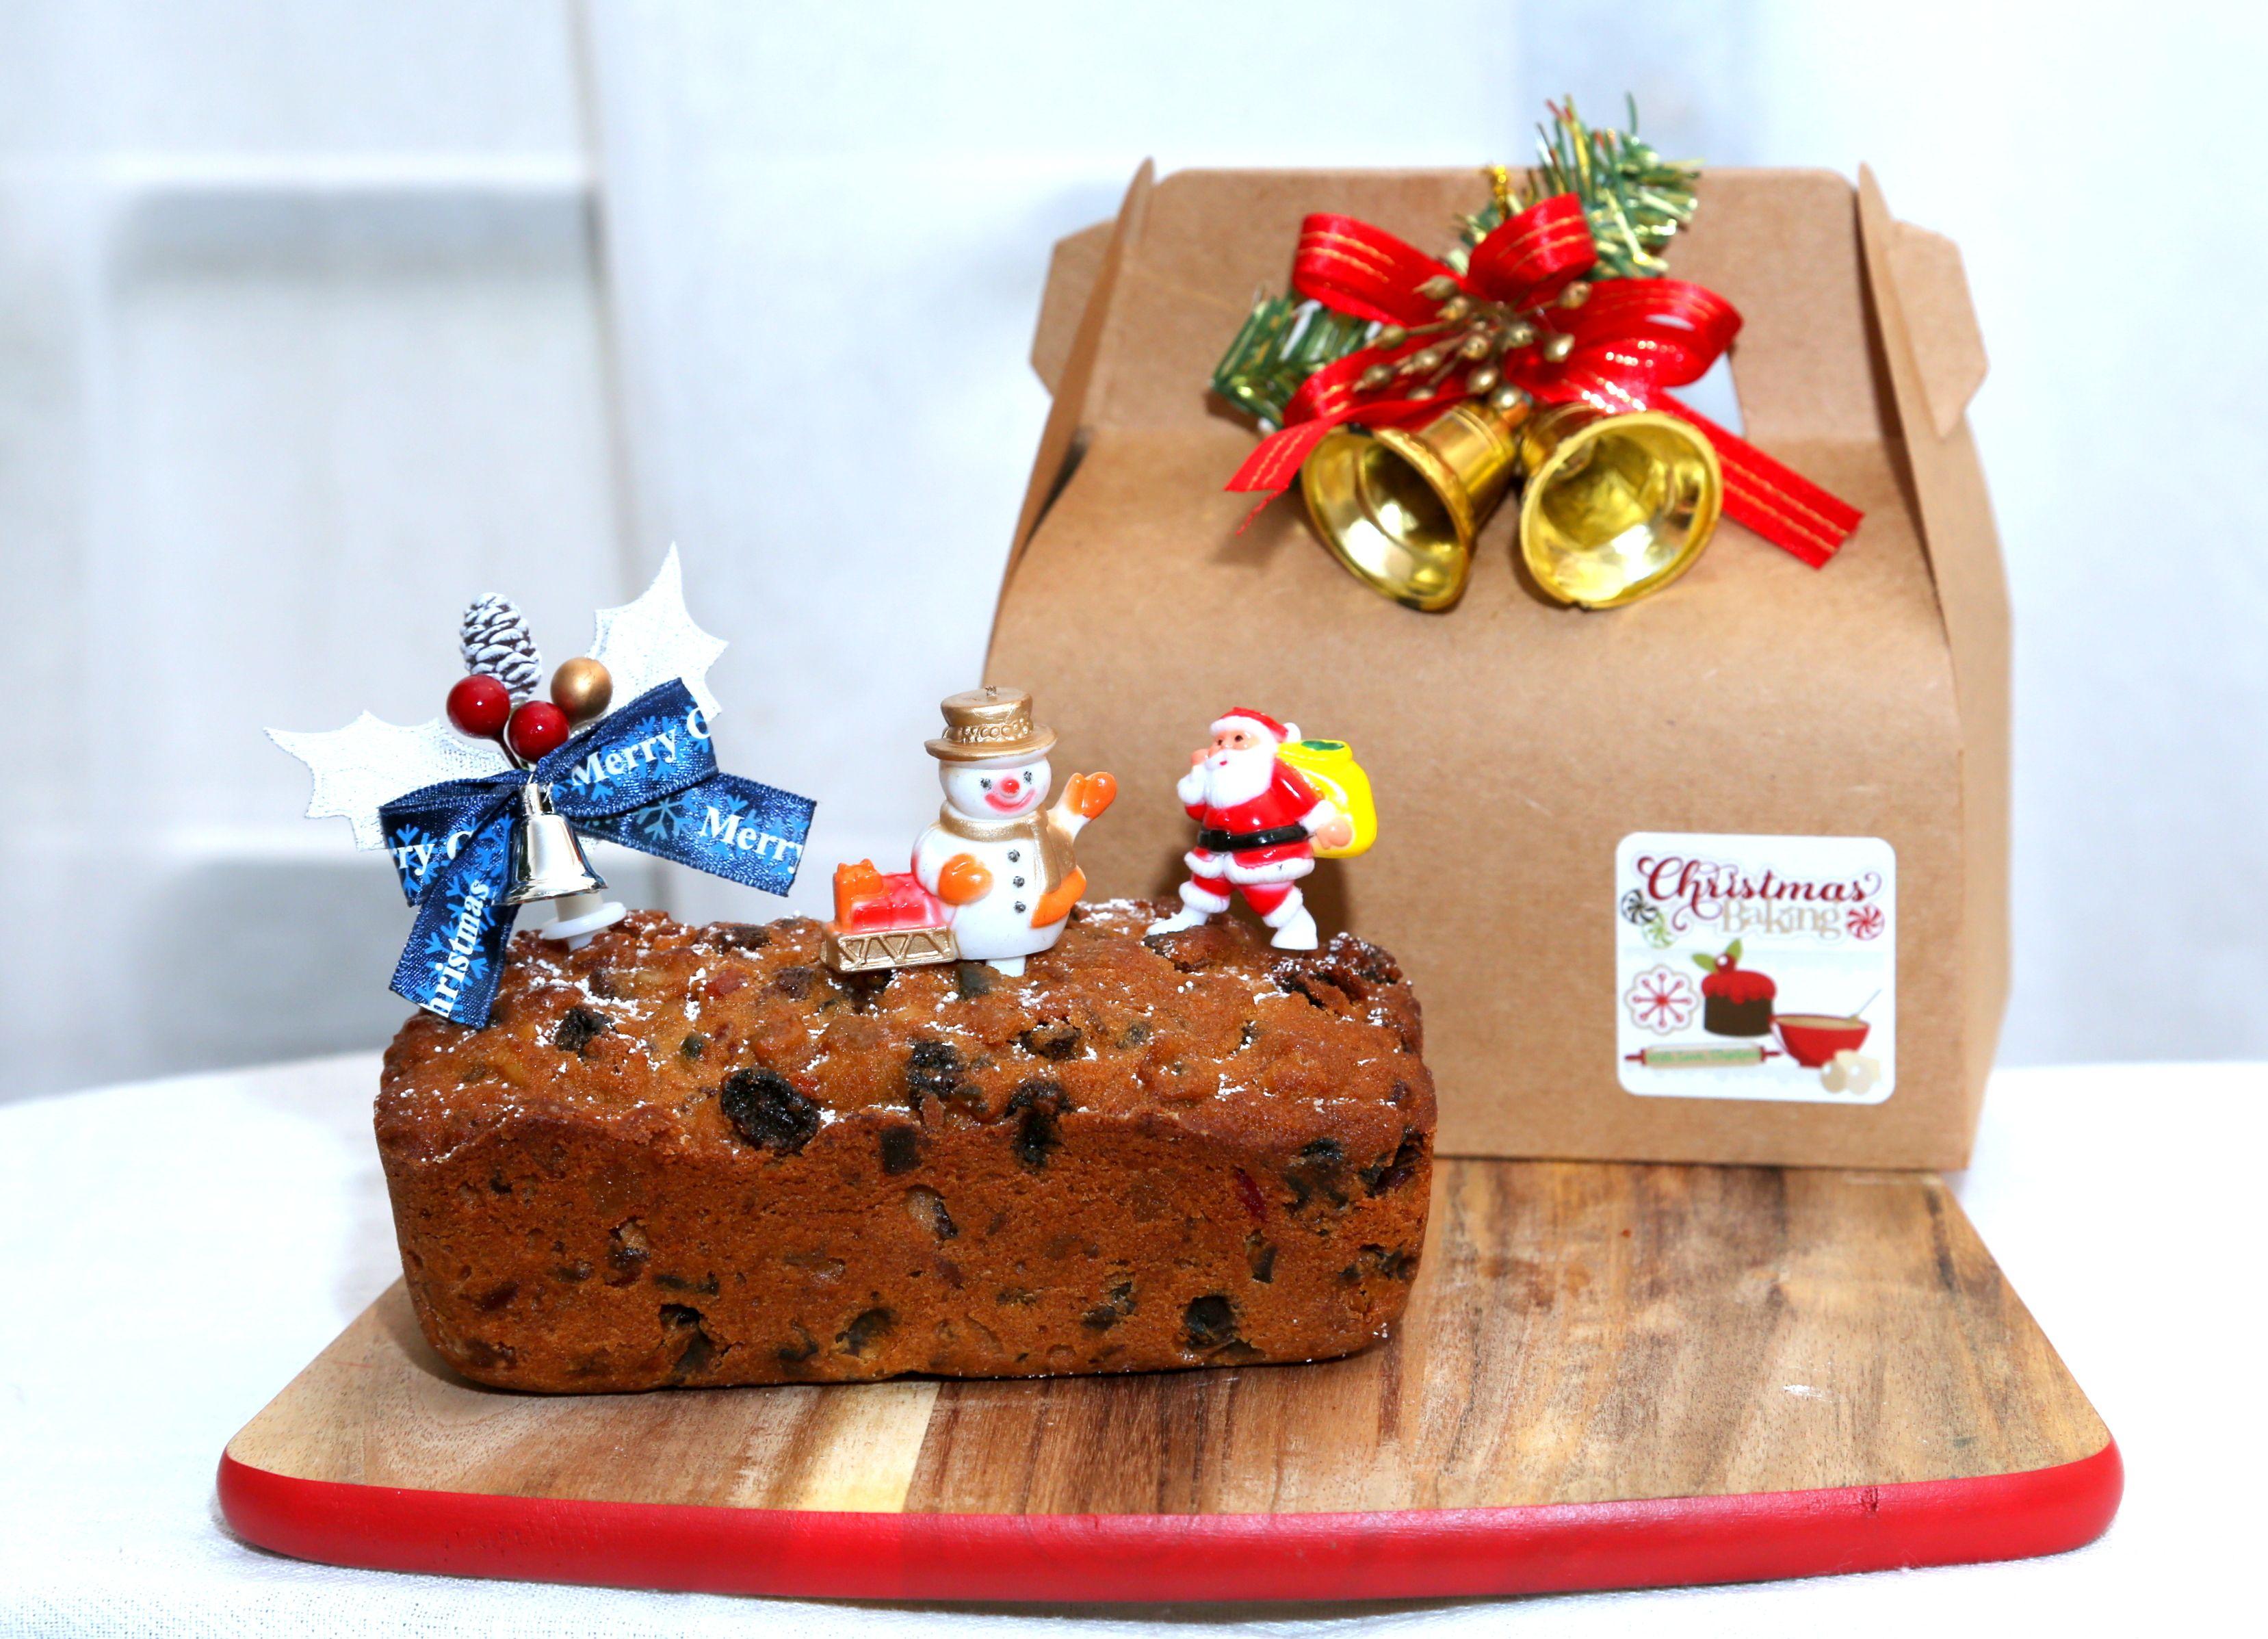 Amazon.com: Christmas Cake Box Set: Home & Kitchen